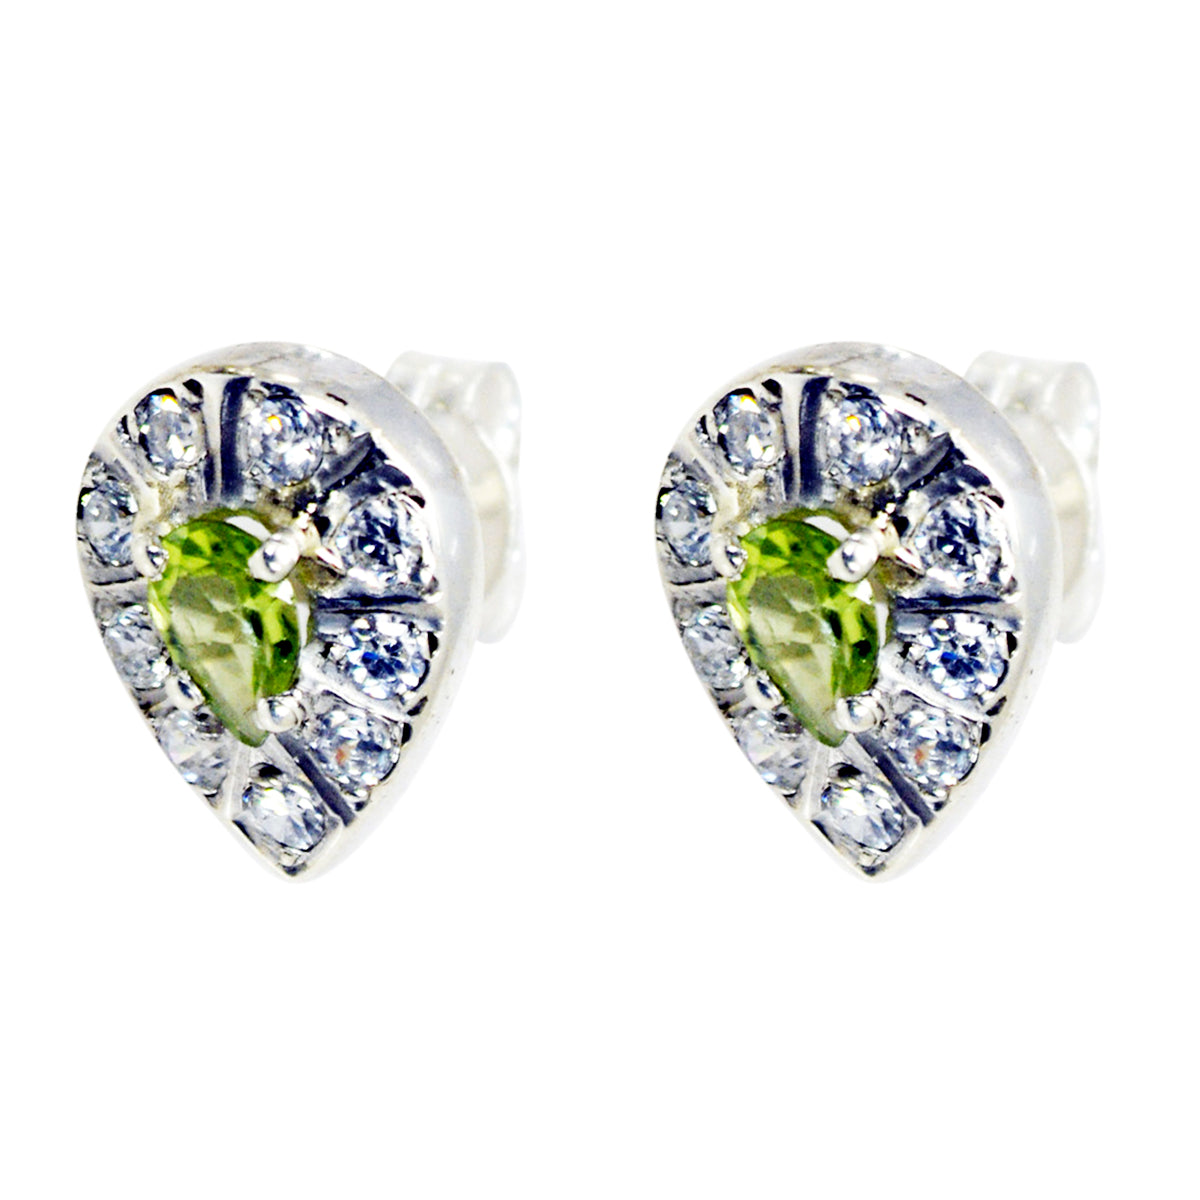 Riyo Good Gemstones pear Faceted Green Peridot Silver Earrings easter Sunday gift